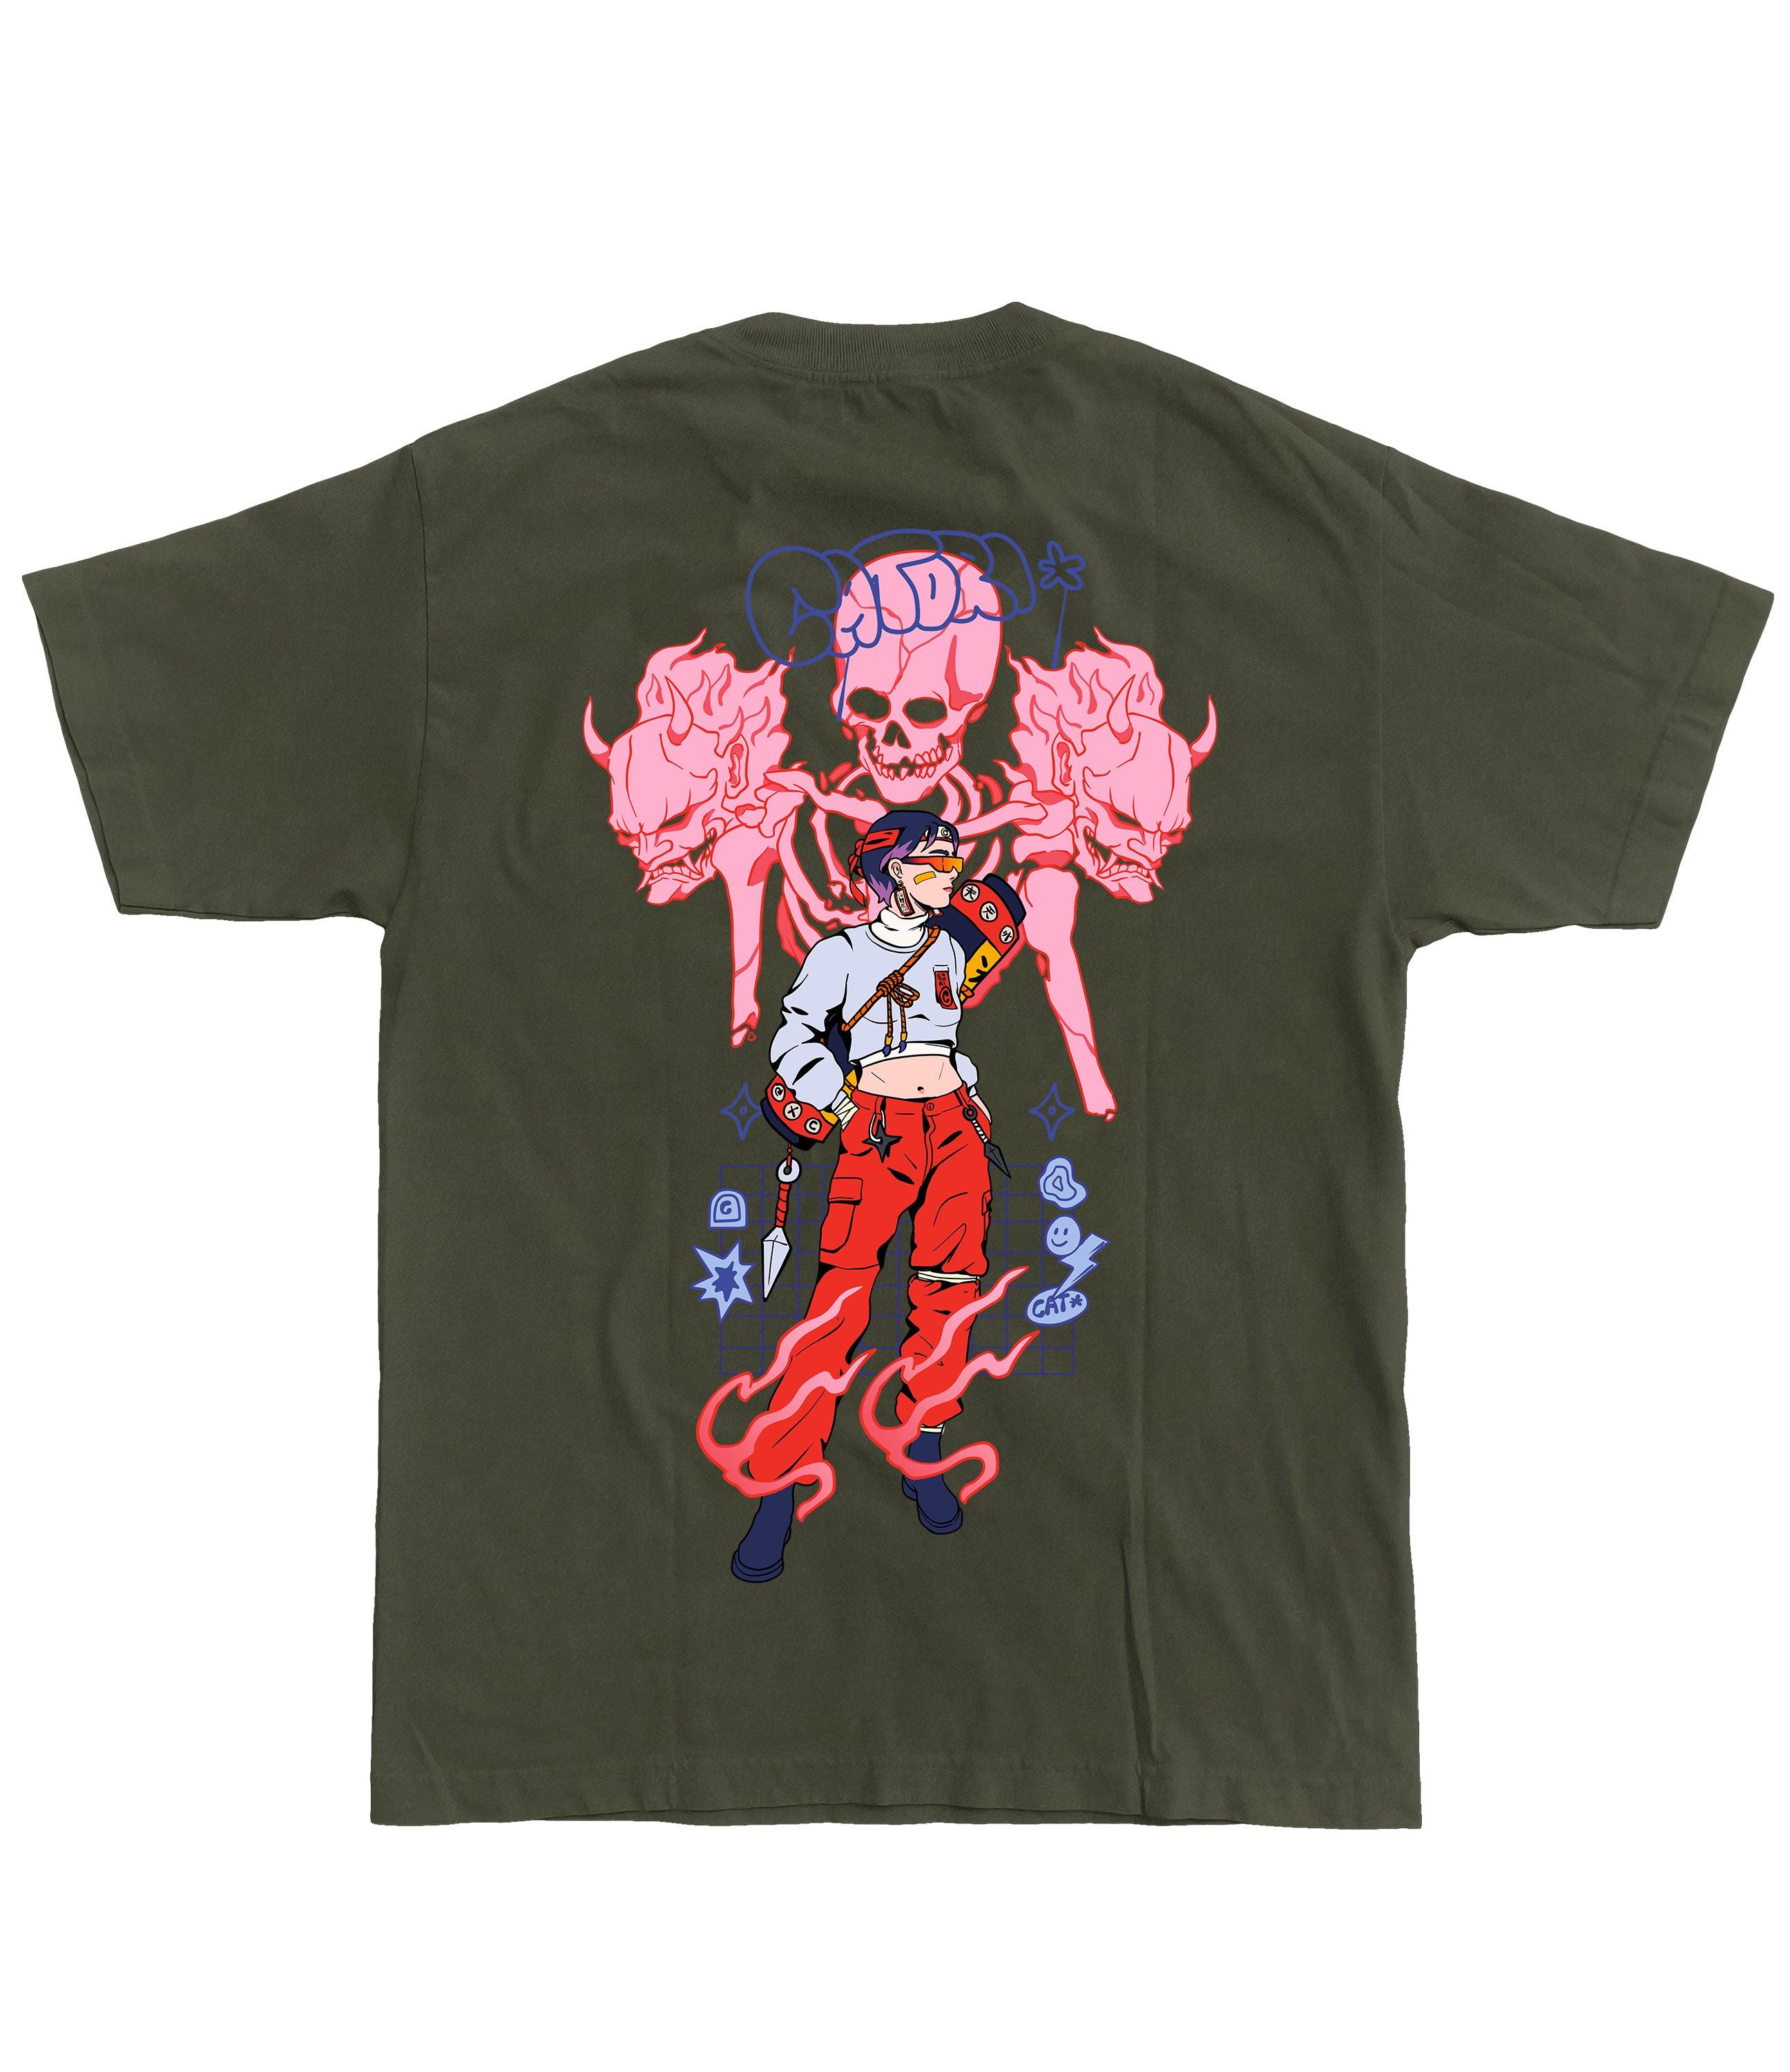 Kunoichi T-Shirt at Catori Clothing | Graphic & Anime Tees, Hoodies & Sweatshirts 